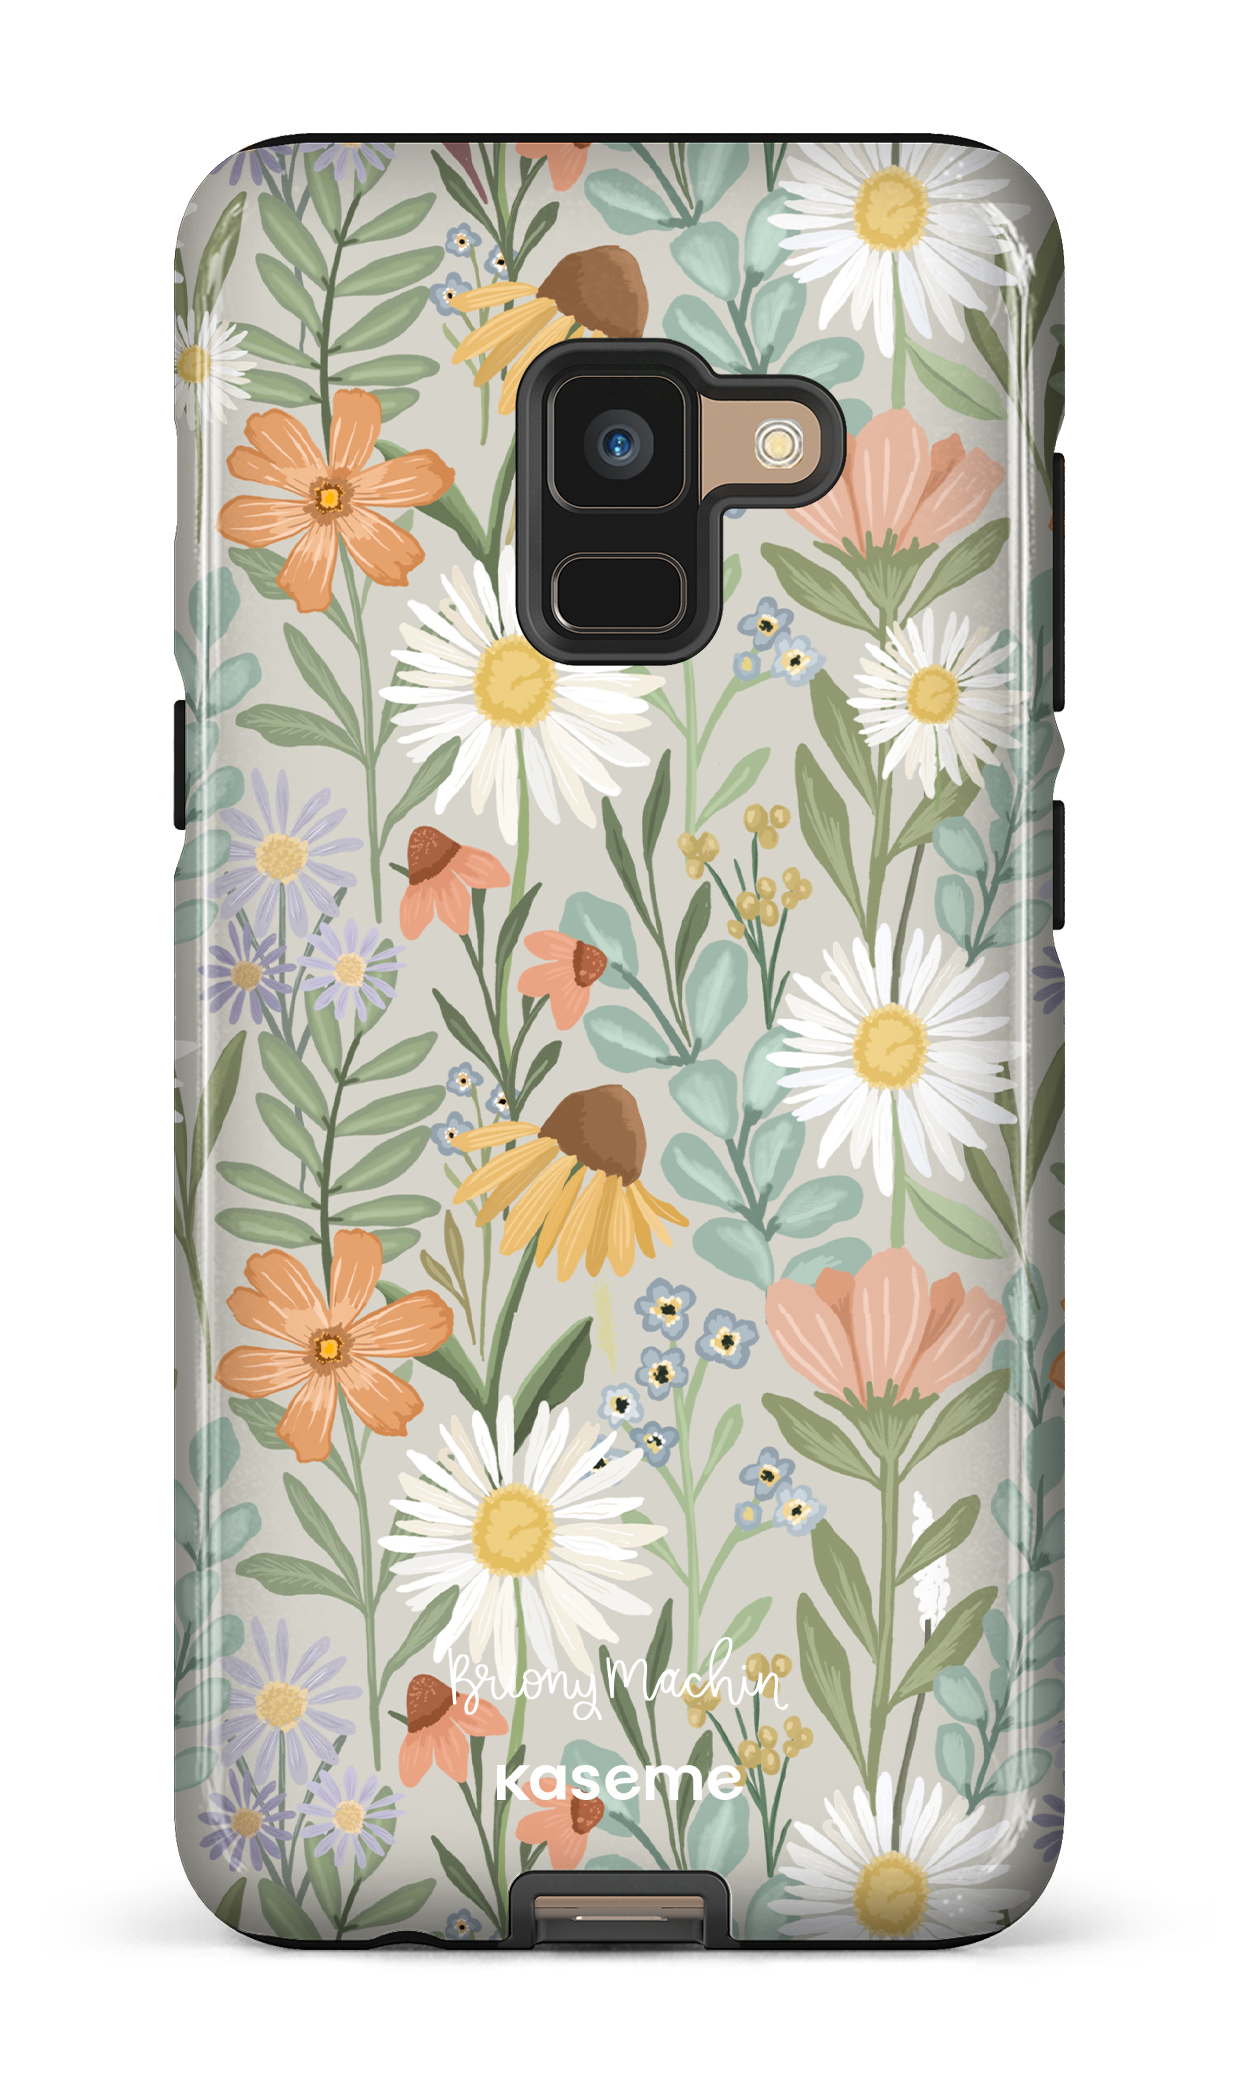 Sending Flowers by Briony Machin - Galaxy A8